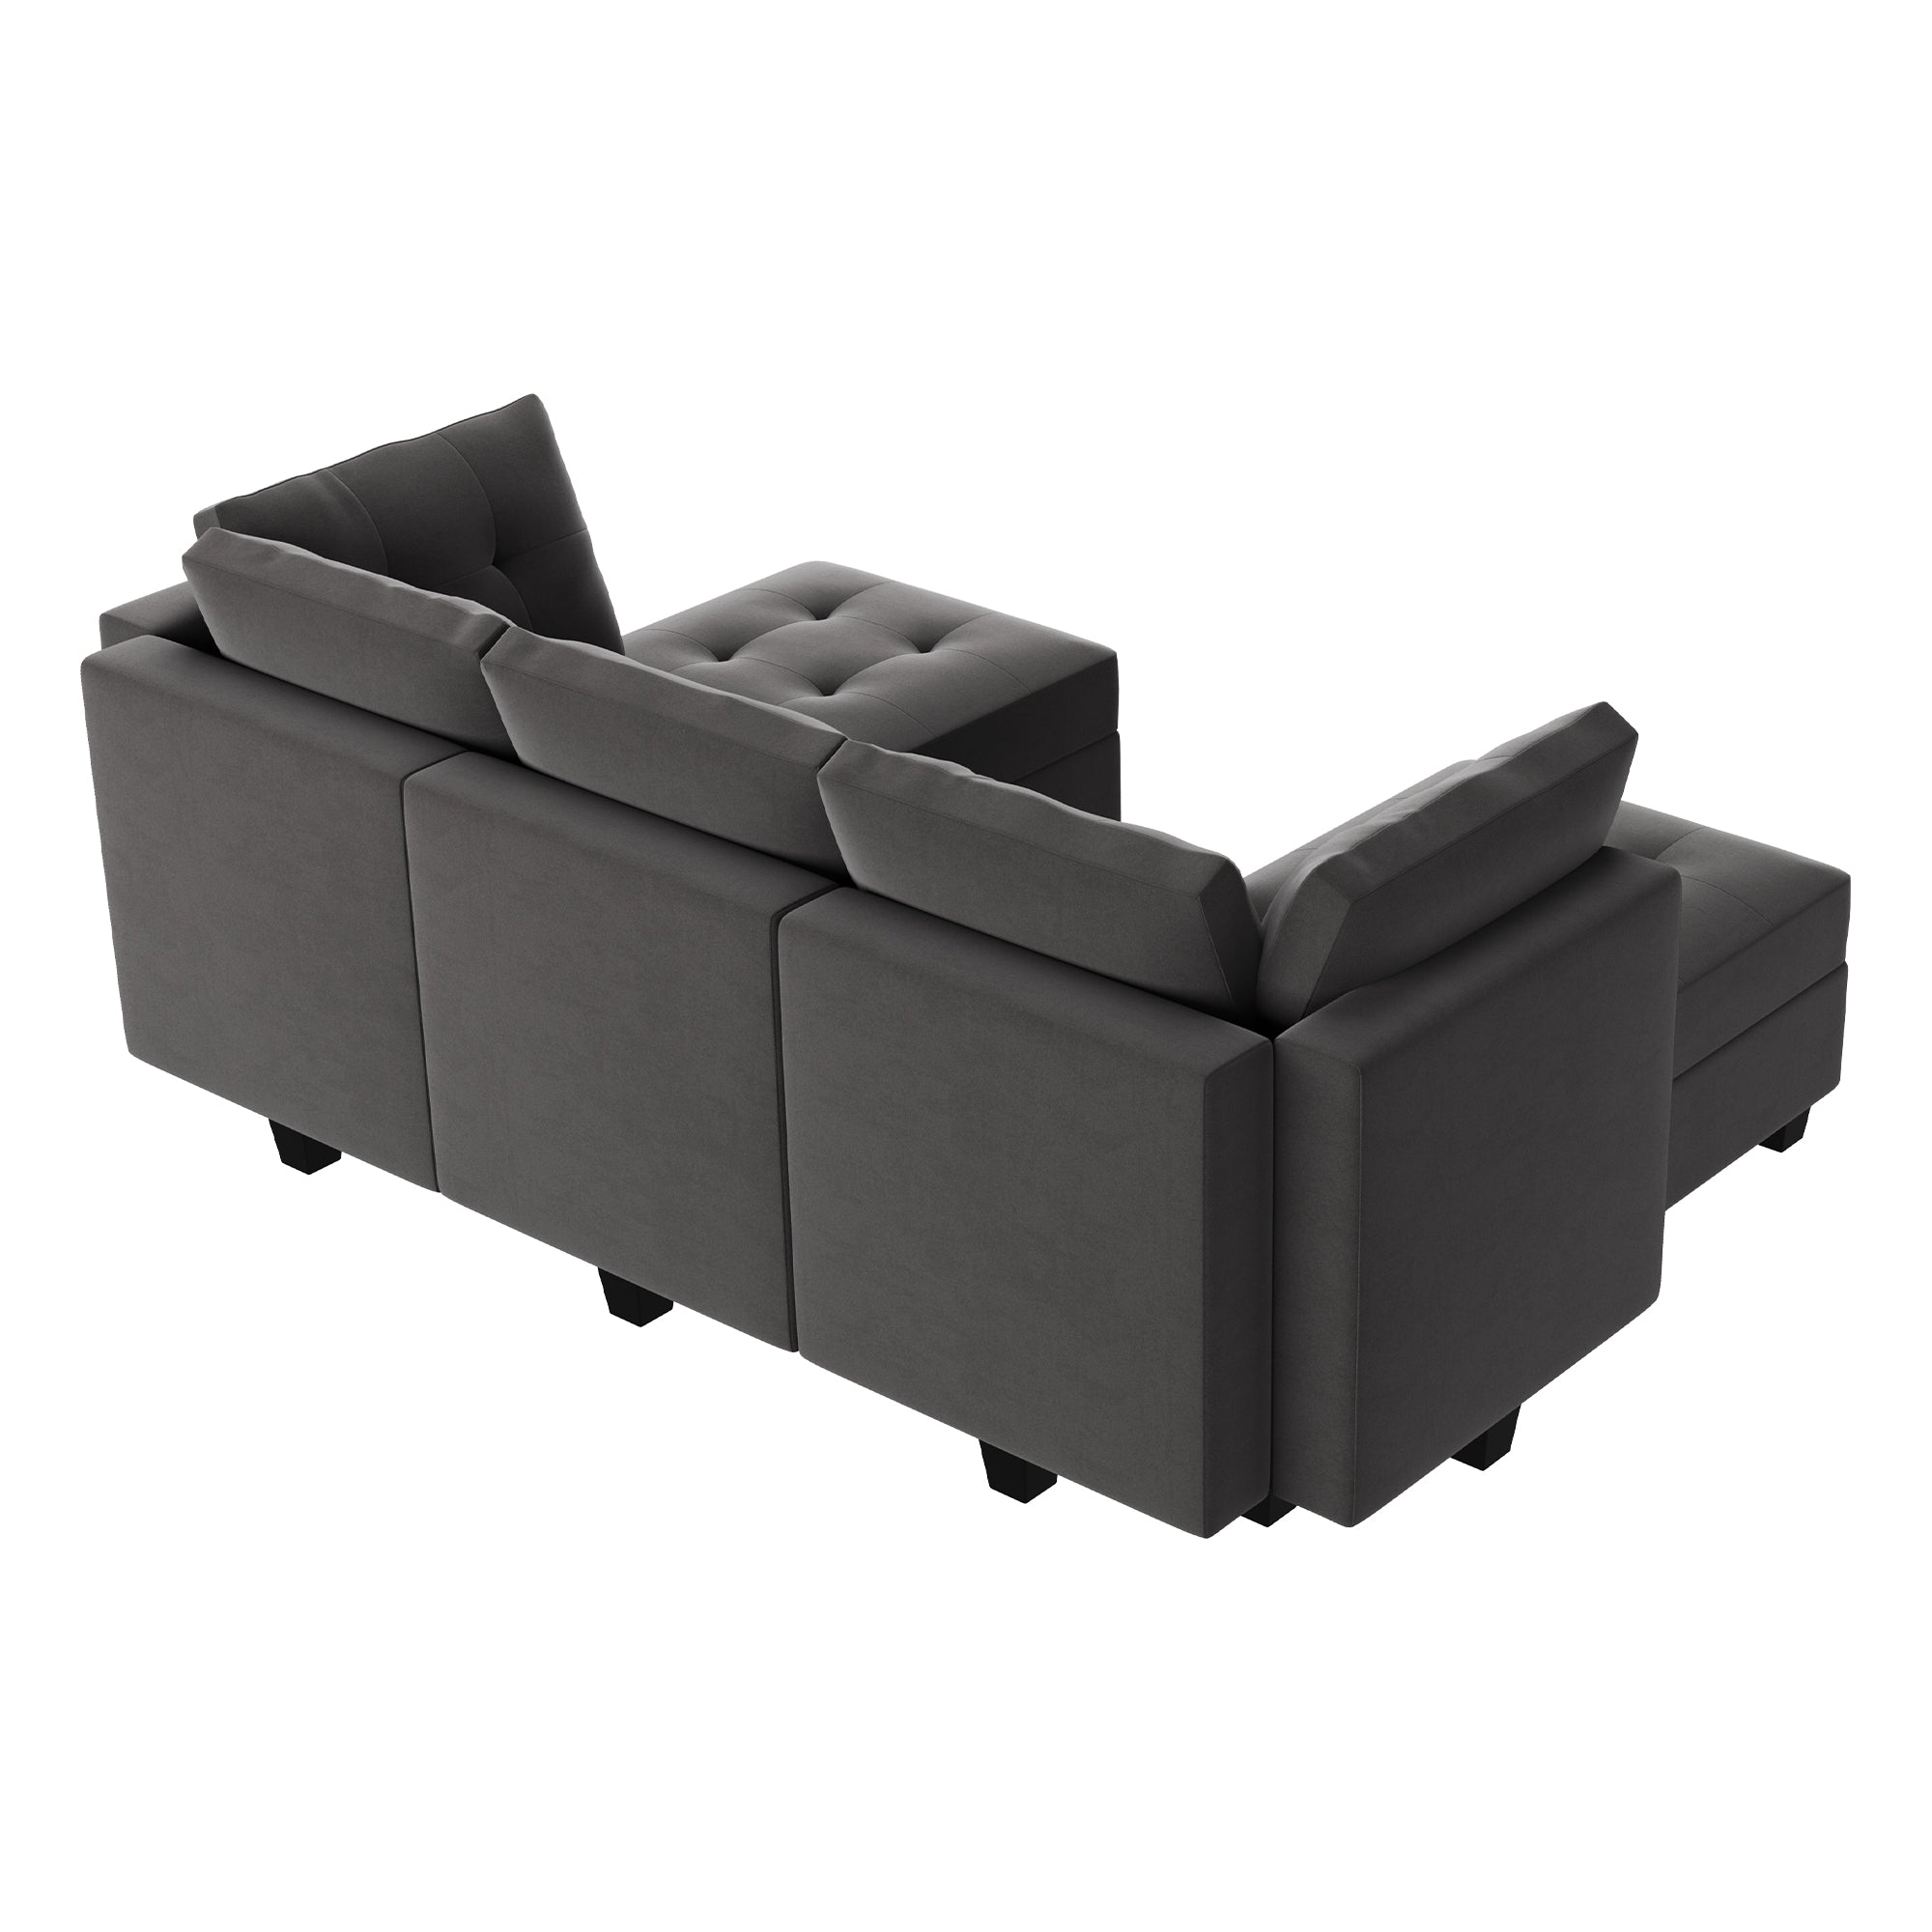 HONBAY Tufted Modular Sofa 5-Seat with Storage Seater